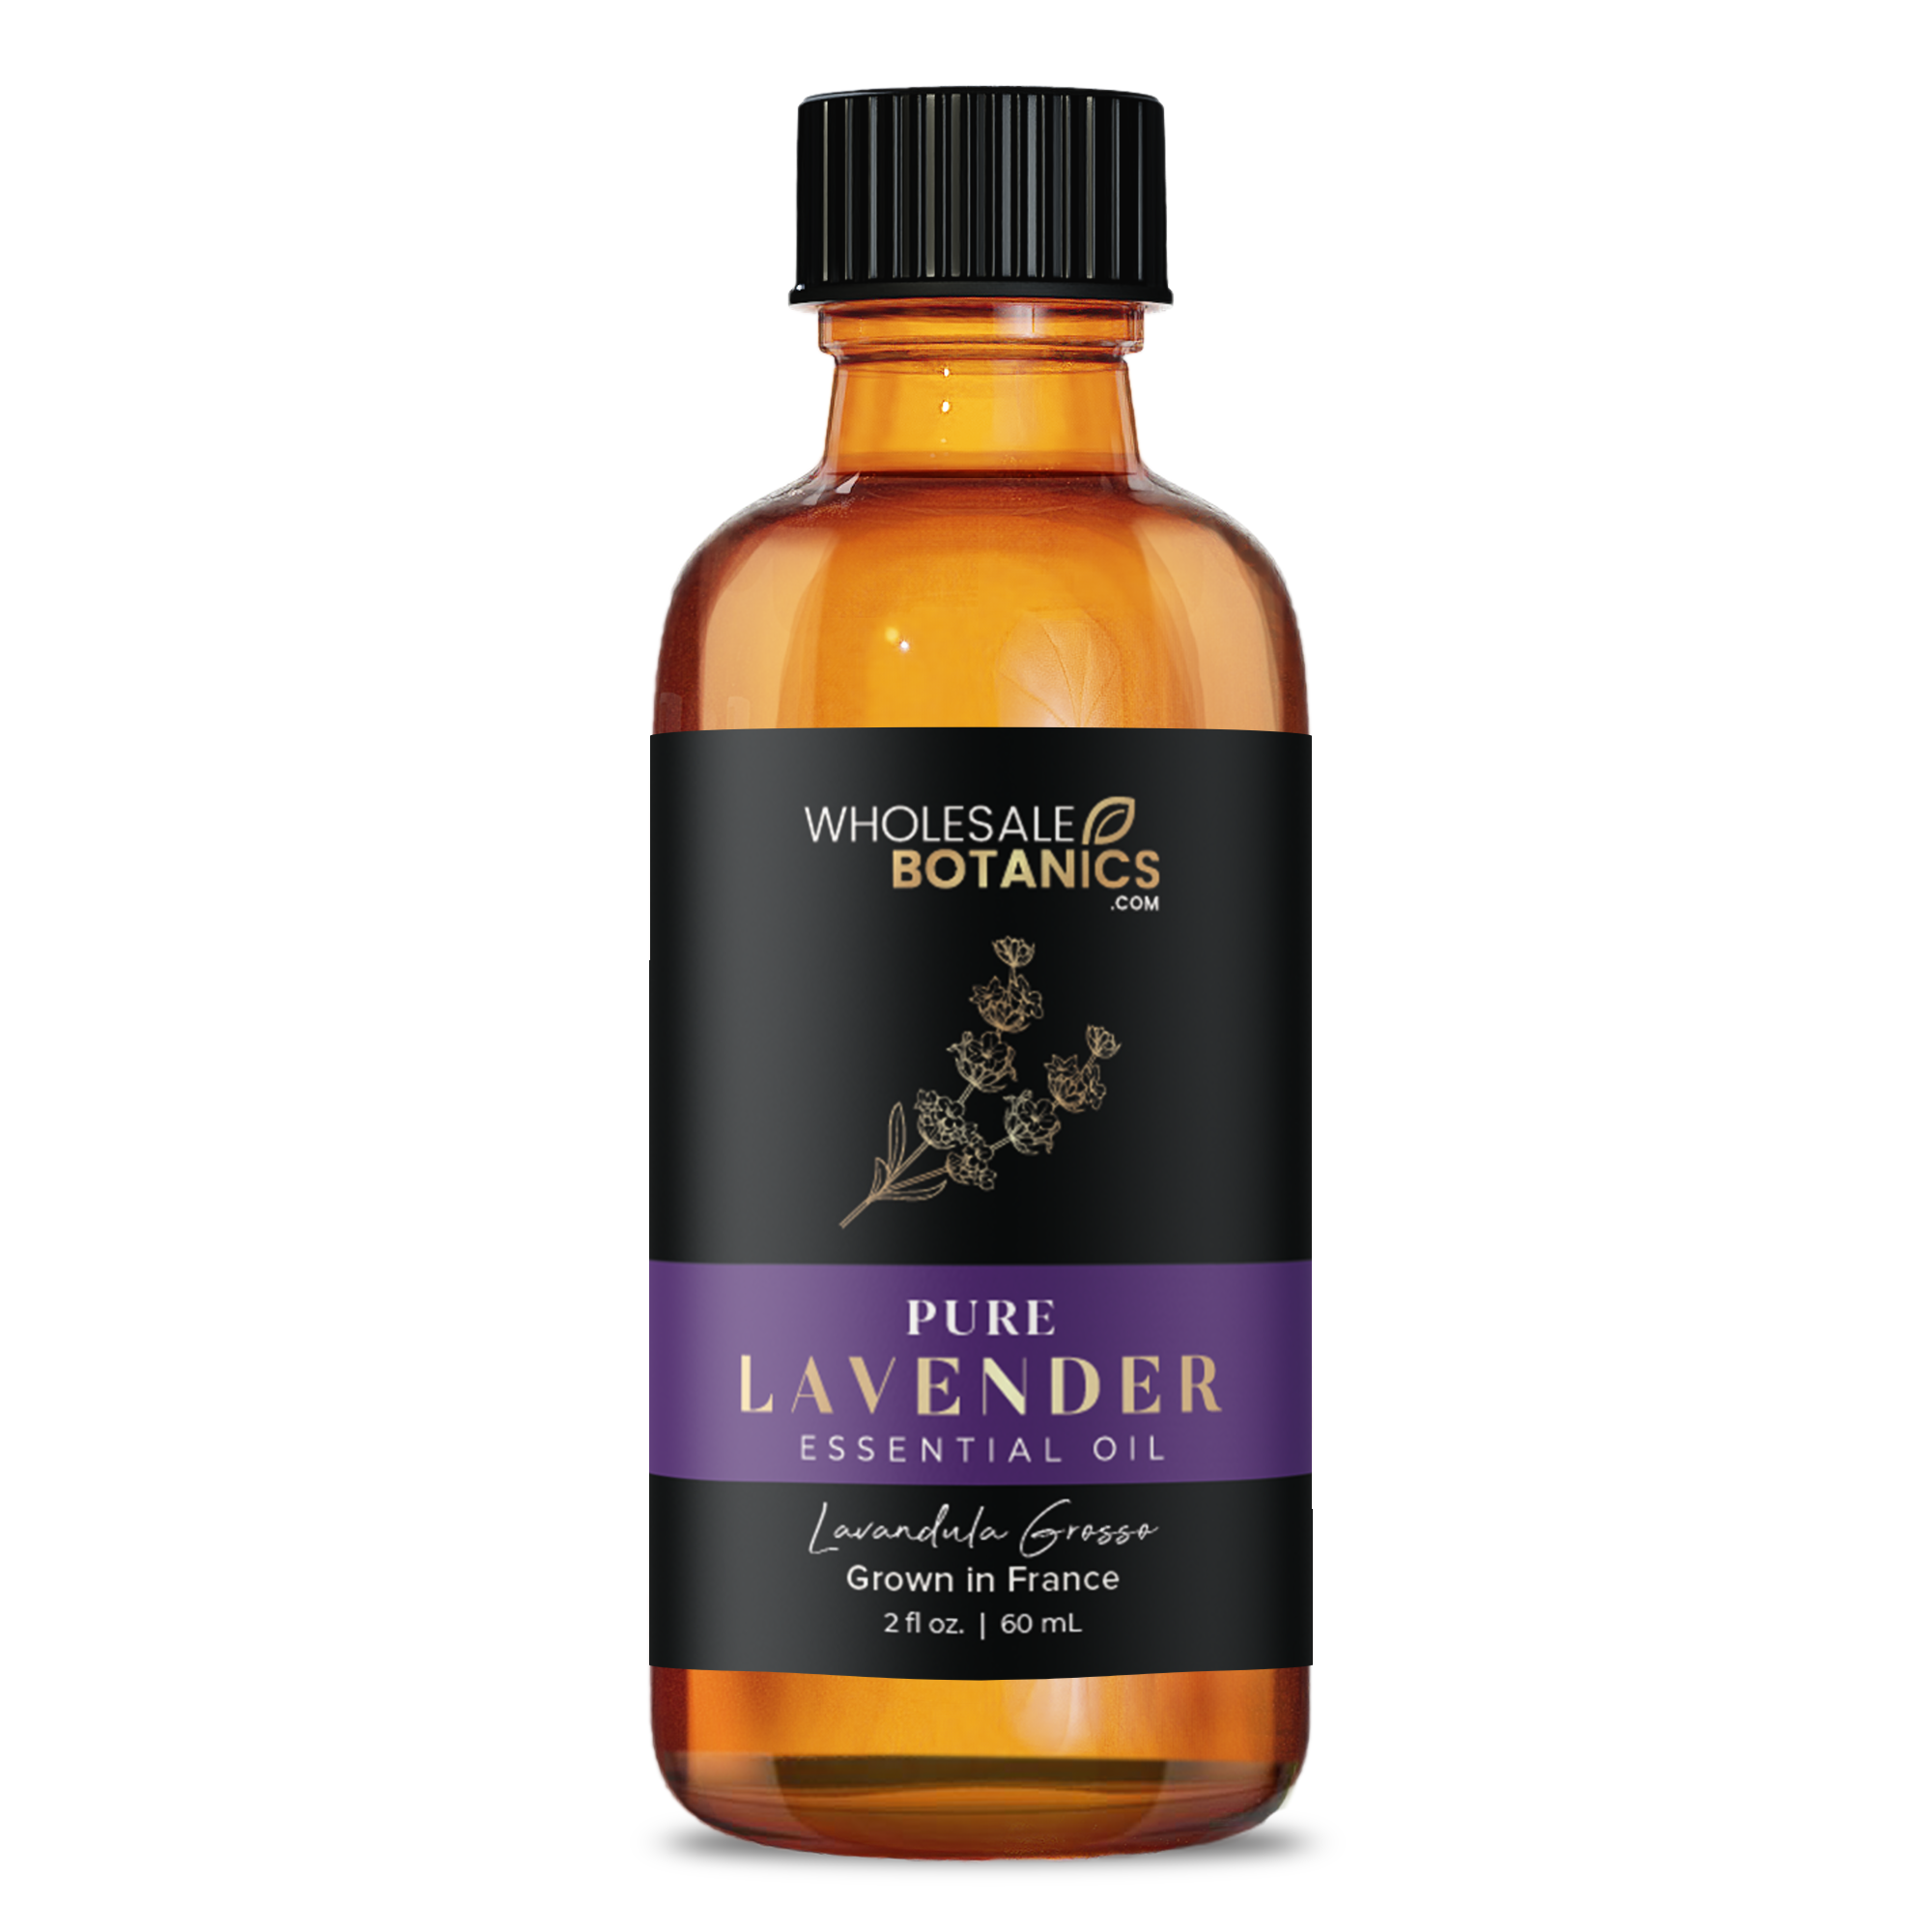 Purity Lavender Essential Oil - Lavandin Grosso - France - 2 oz